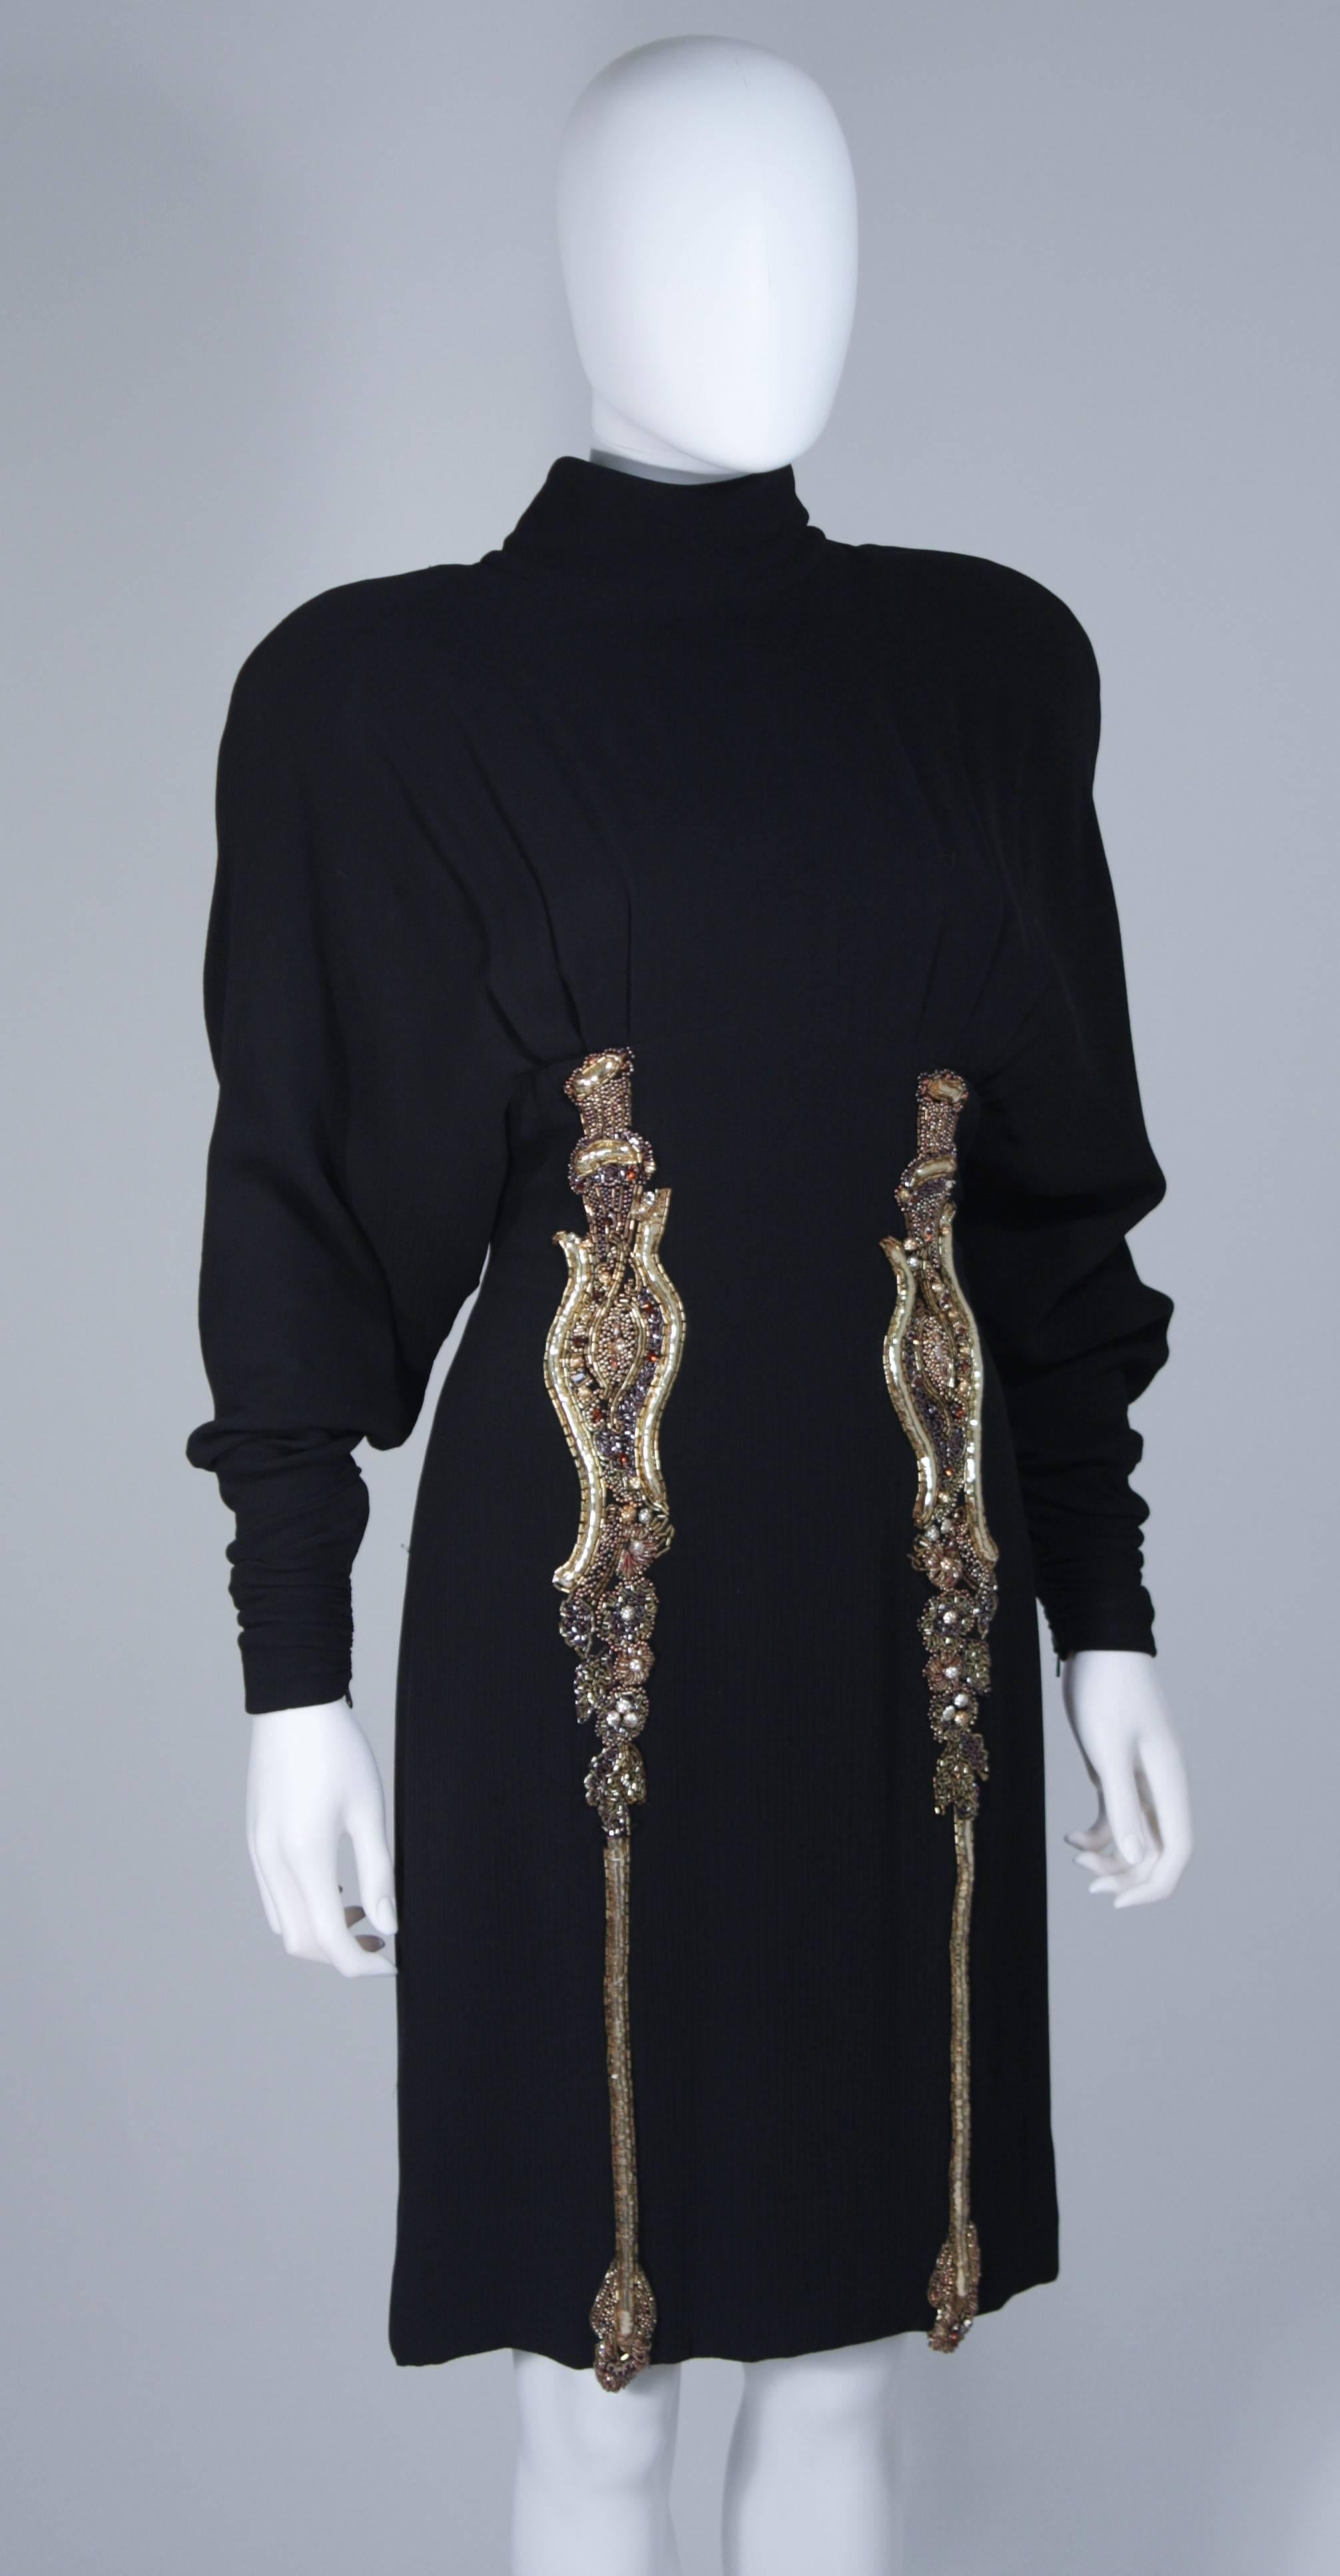 KARL LAGERFELD Circa 1980's Black Silk Embellished Cocktail Dress Size 40 1